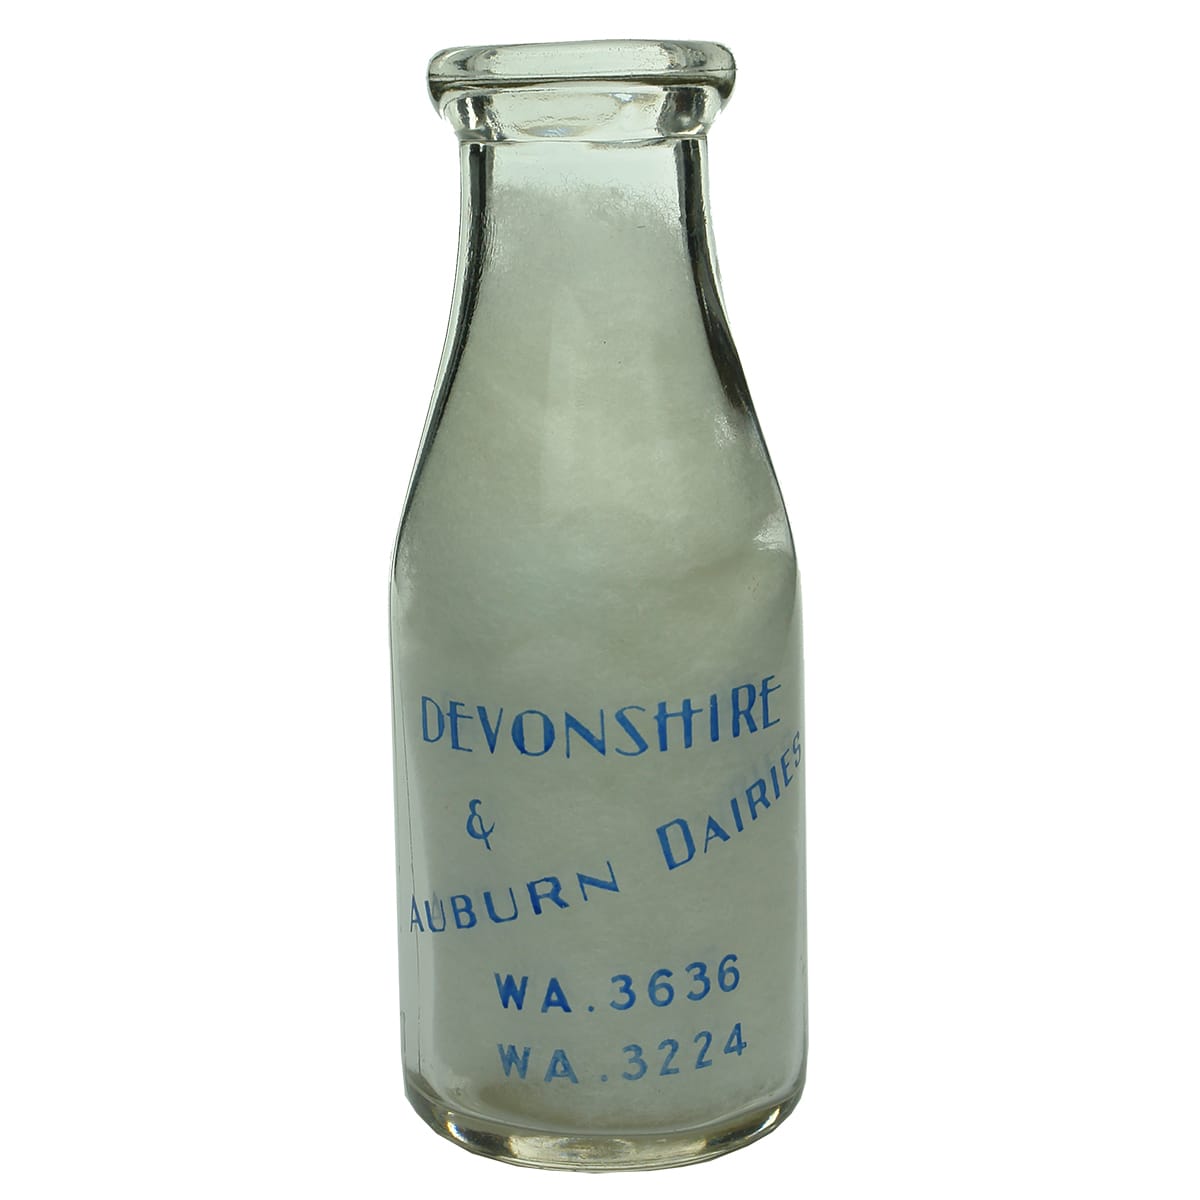 Milk. Devonshire & Auburn Dairies. Wad lip. Ceramic label. 1 Pint. (Victoria)